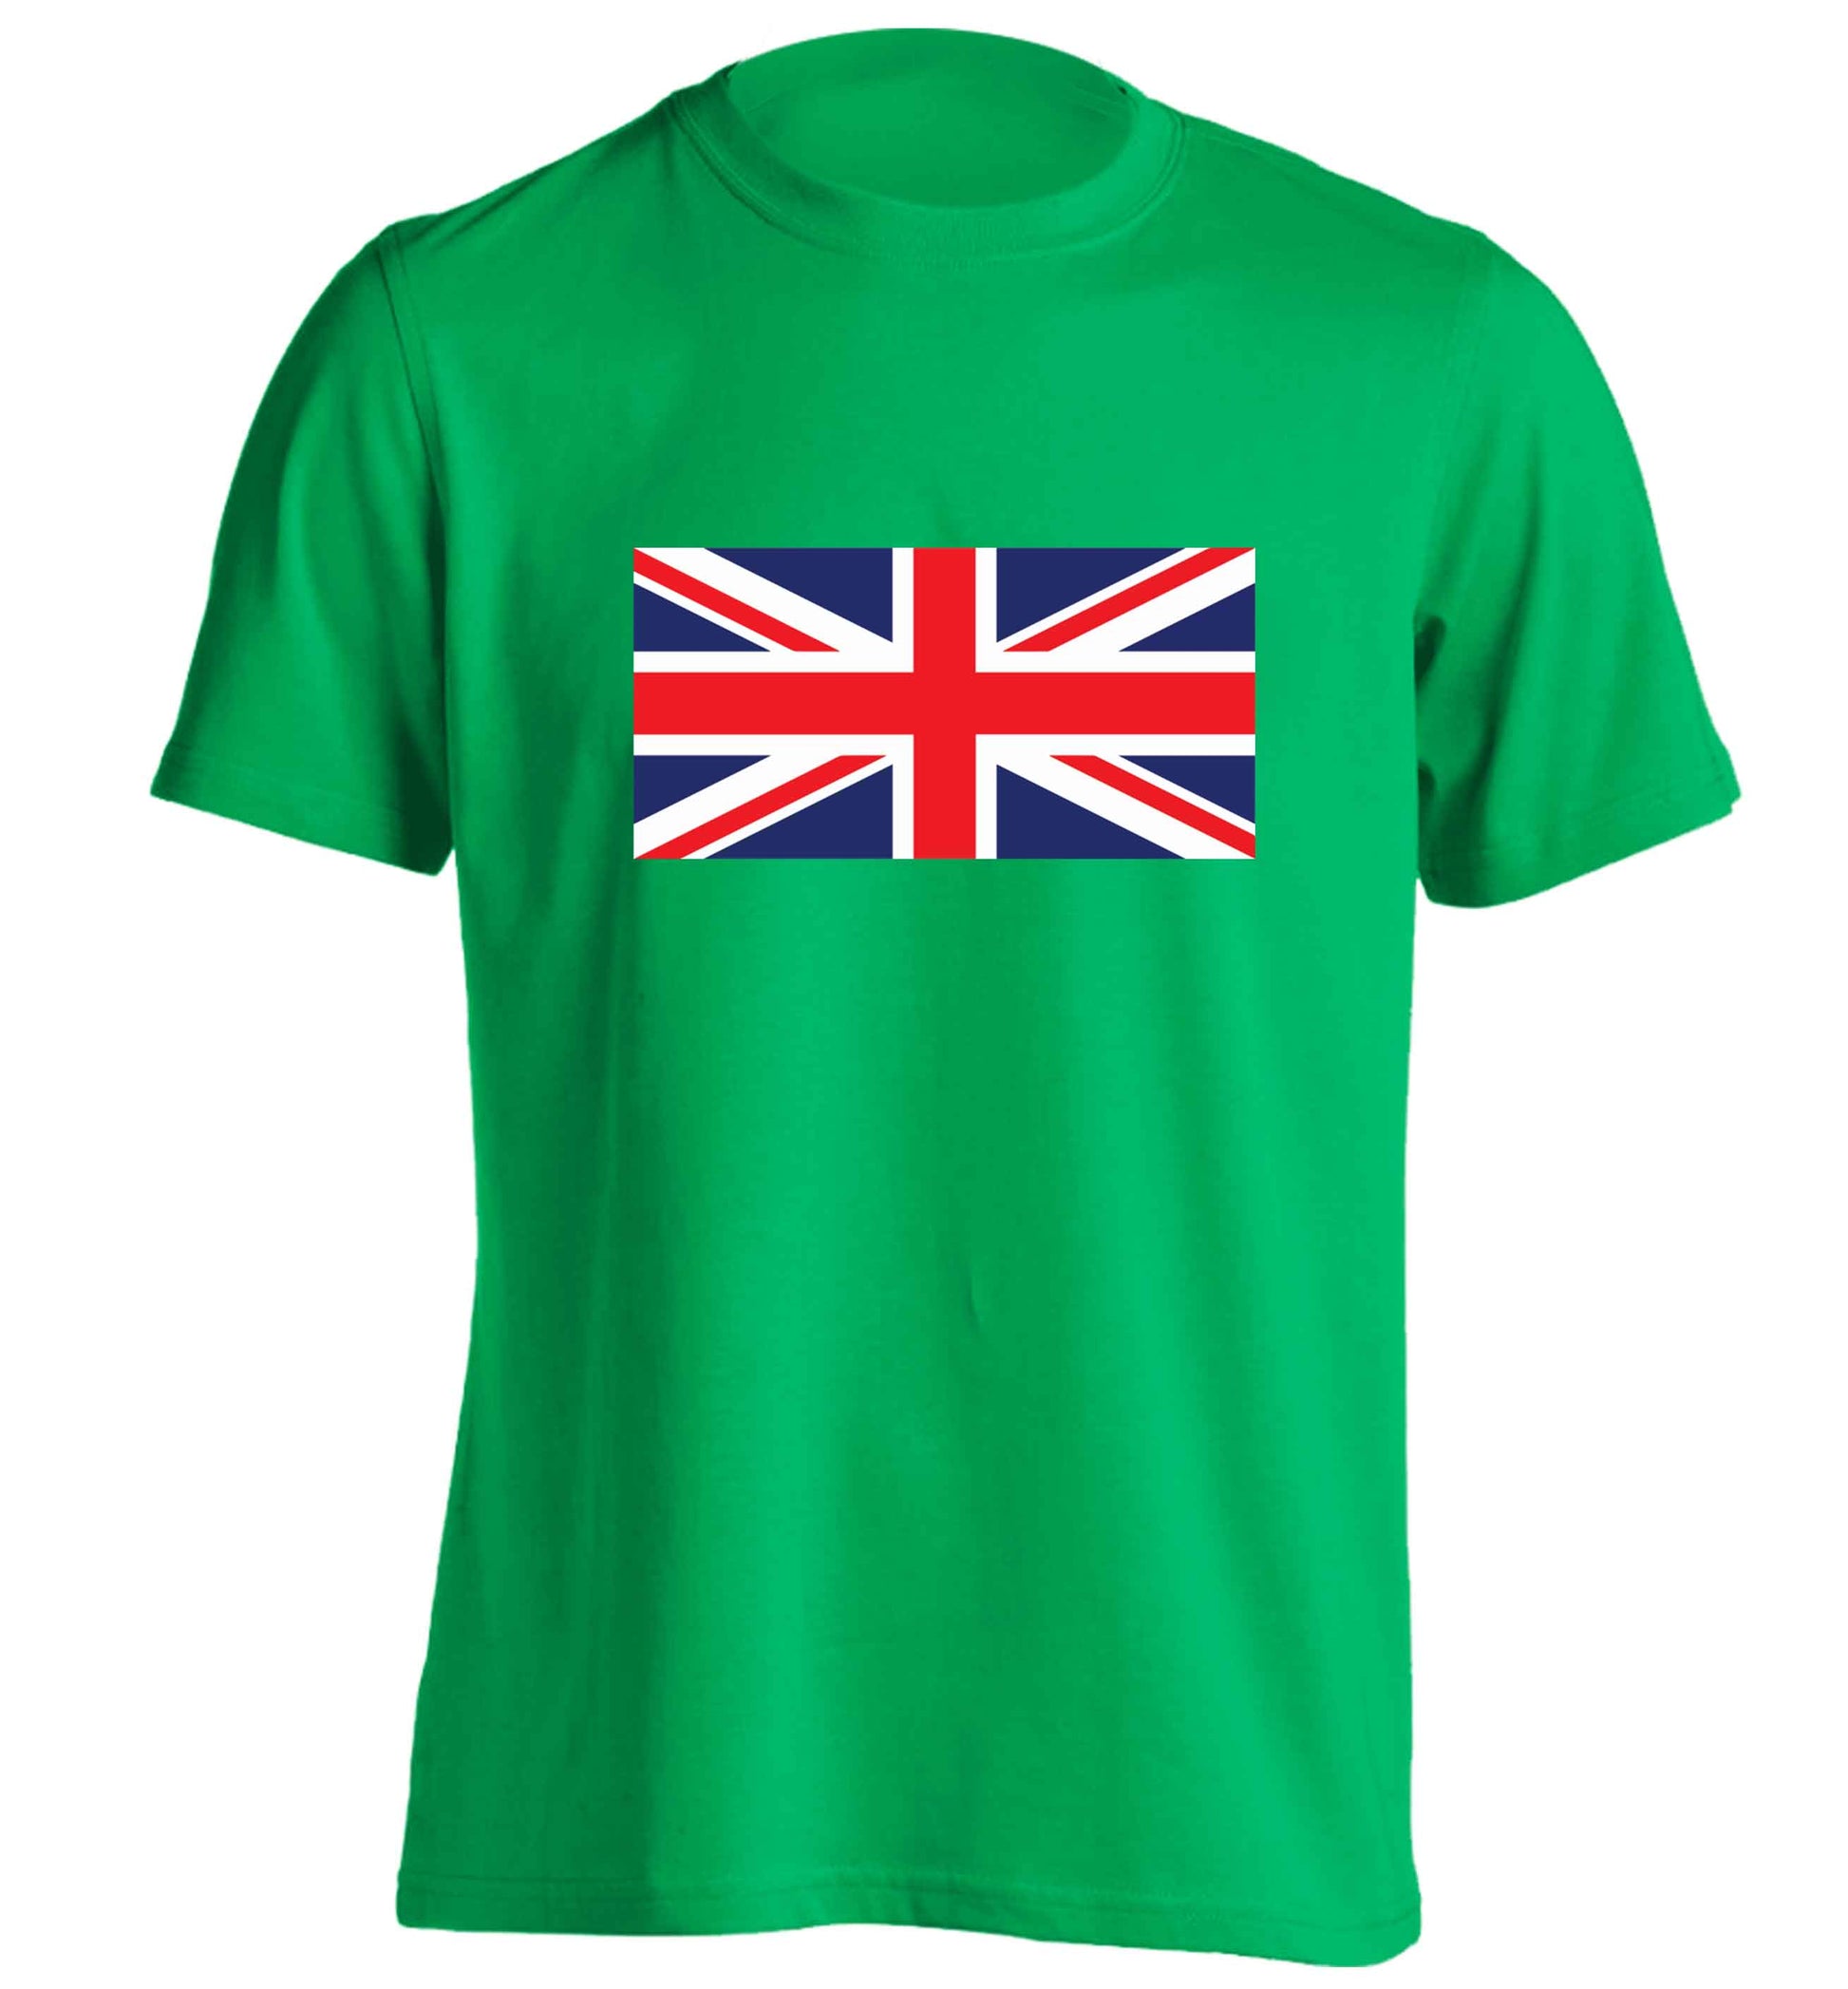 Union Jack adults unisex green Tshirt 2XL